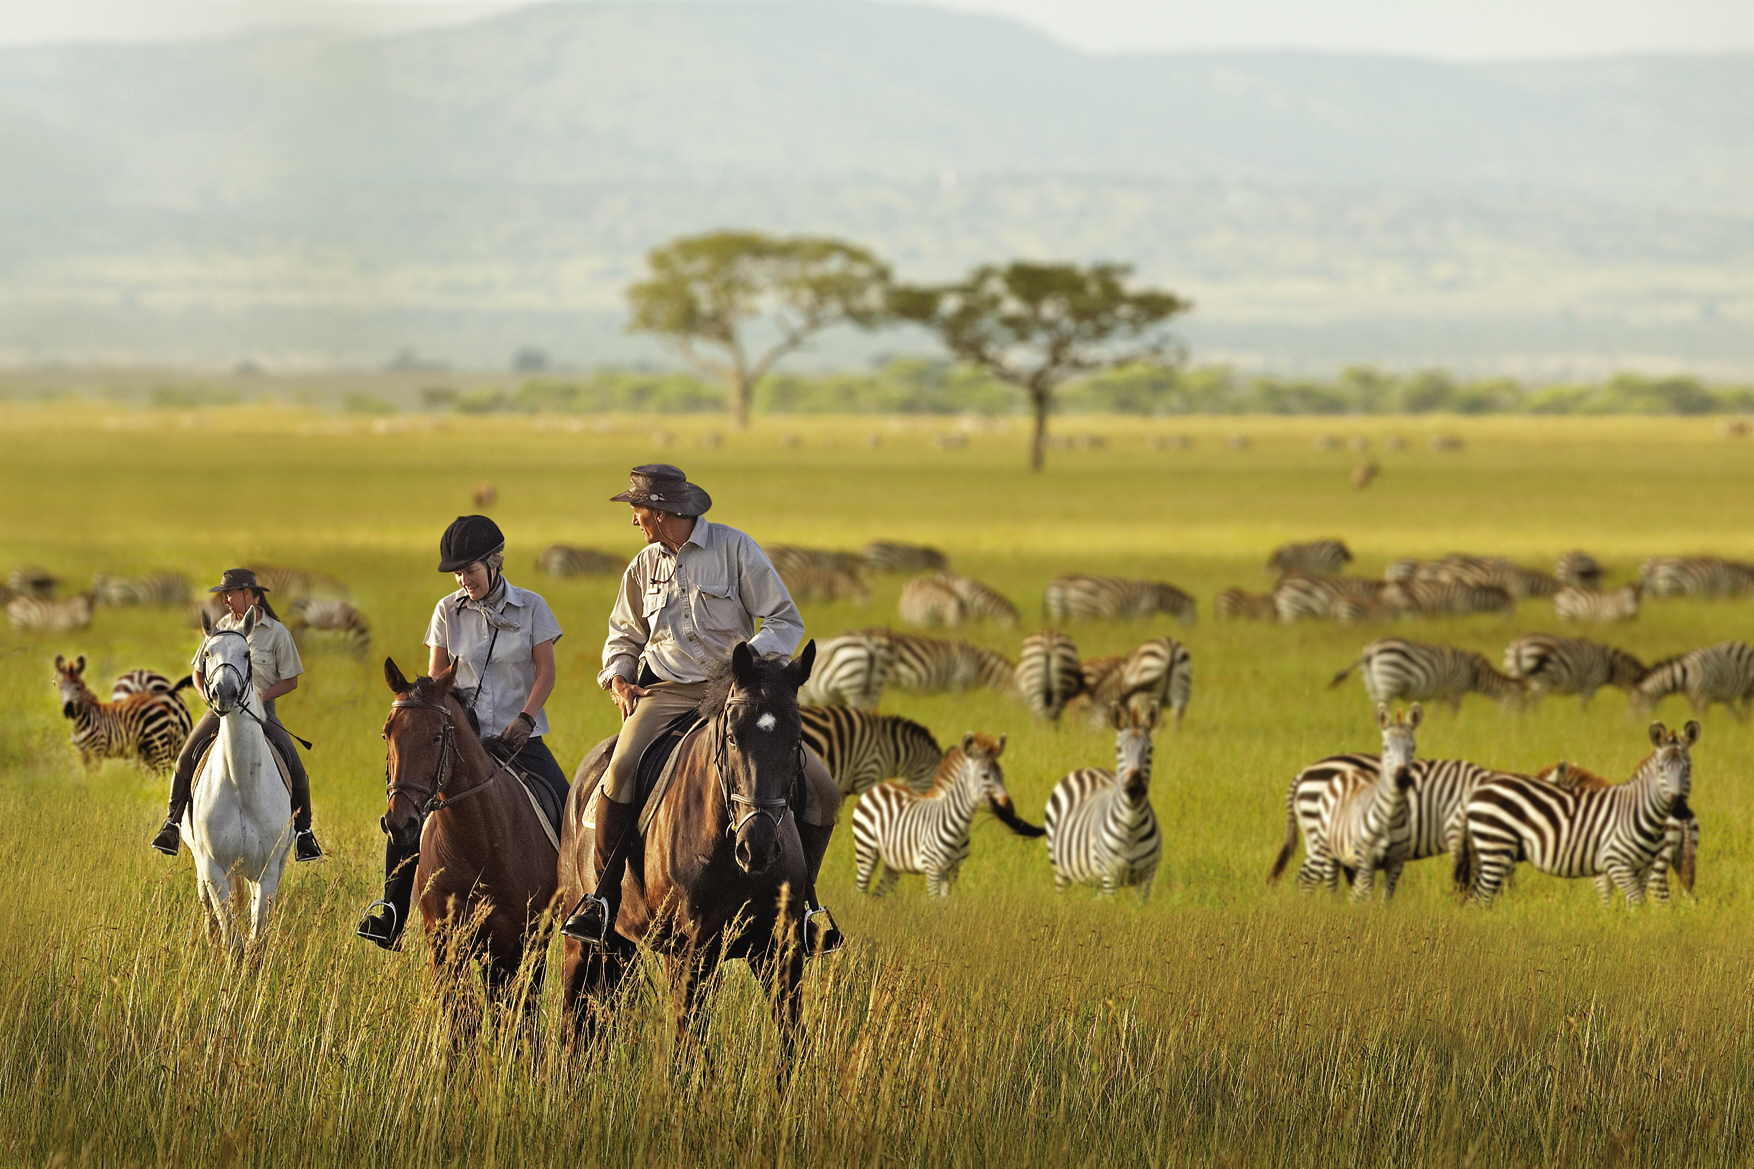 LXP - Beautiful Location Getaway Travel To Tanzania Serengeti National Park Zebras